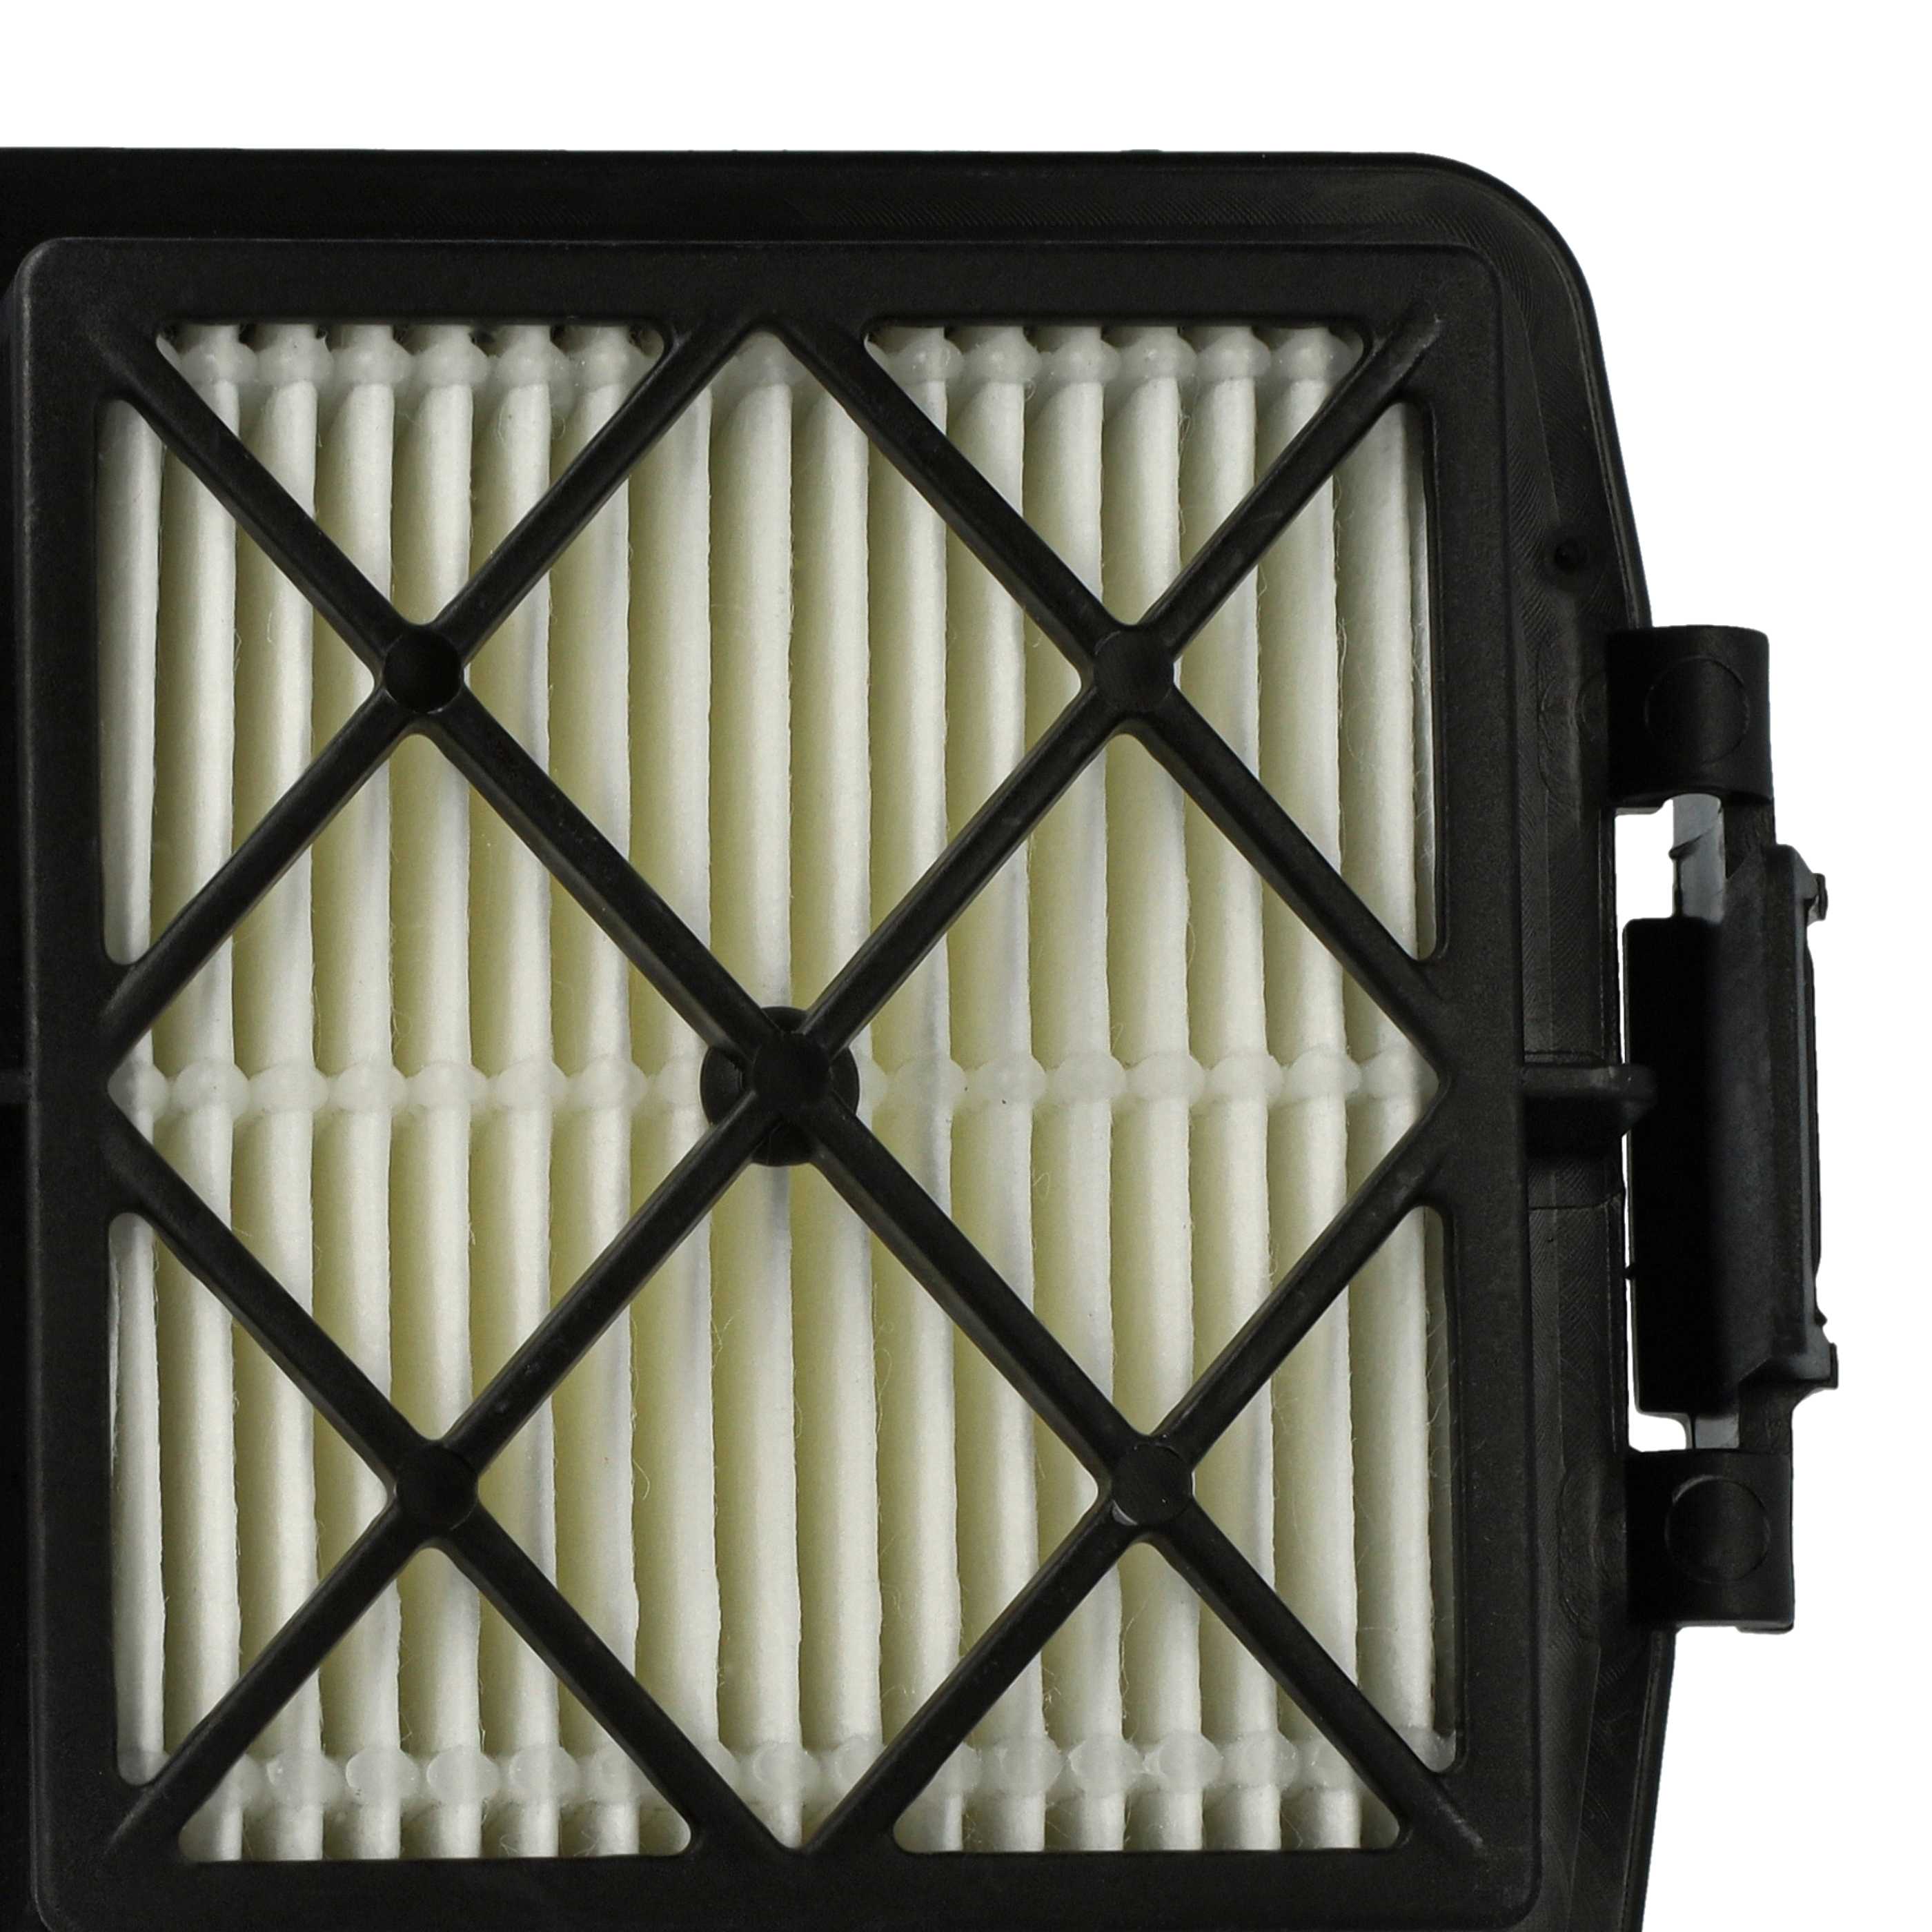 3x Filtro reemplaza Kärcher 2.863-240.0 para aspiradora - filtro Hepa negro / blanco